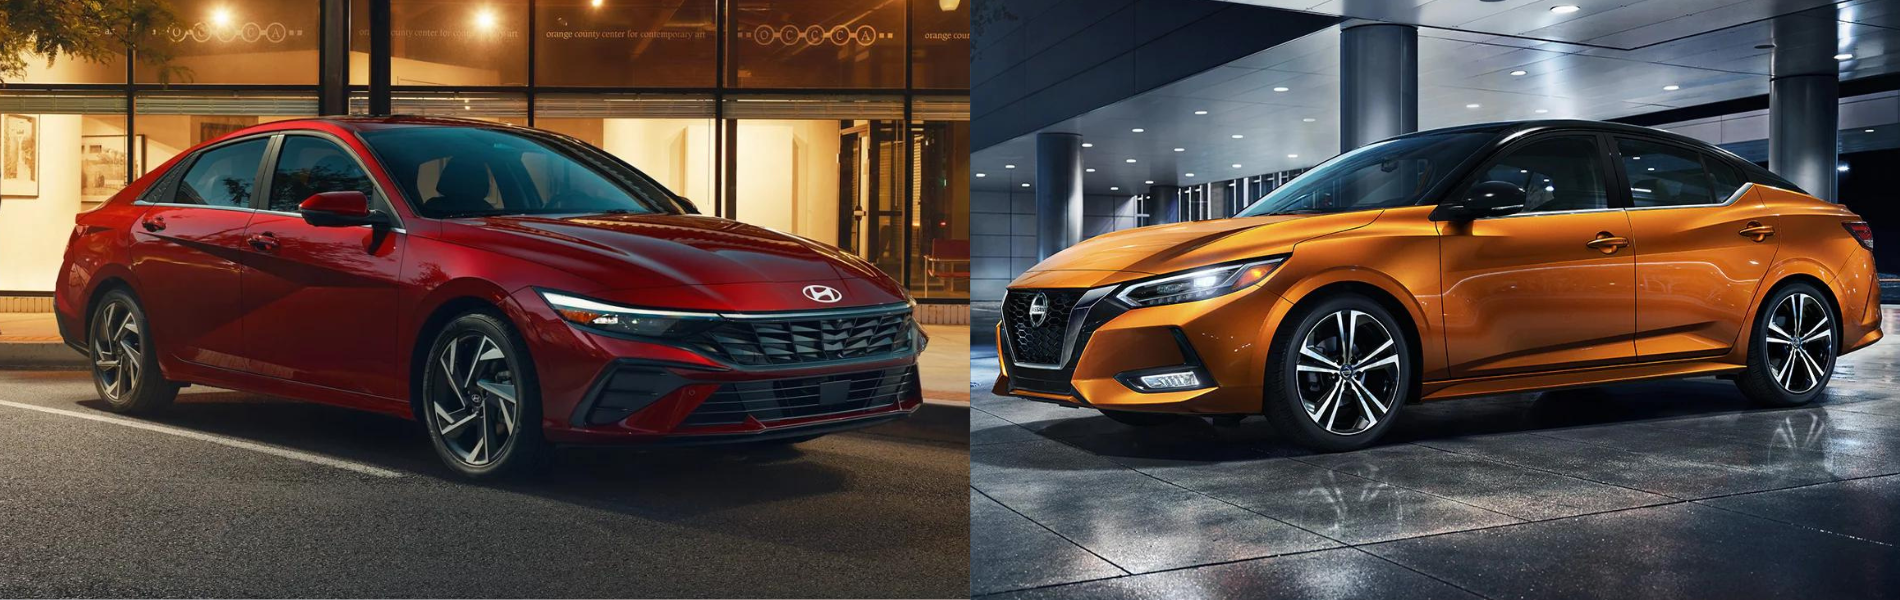 Hyundai Elantra vs Nissan Sentra